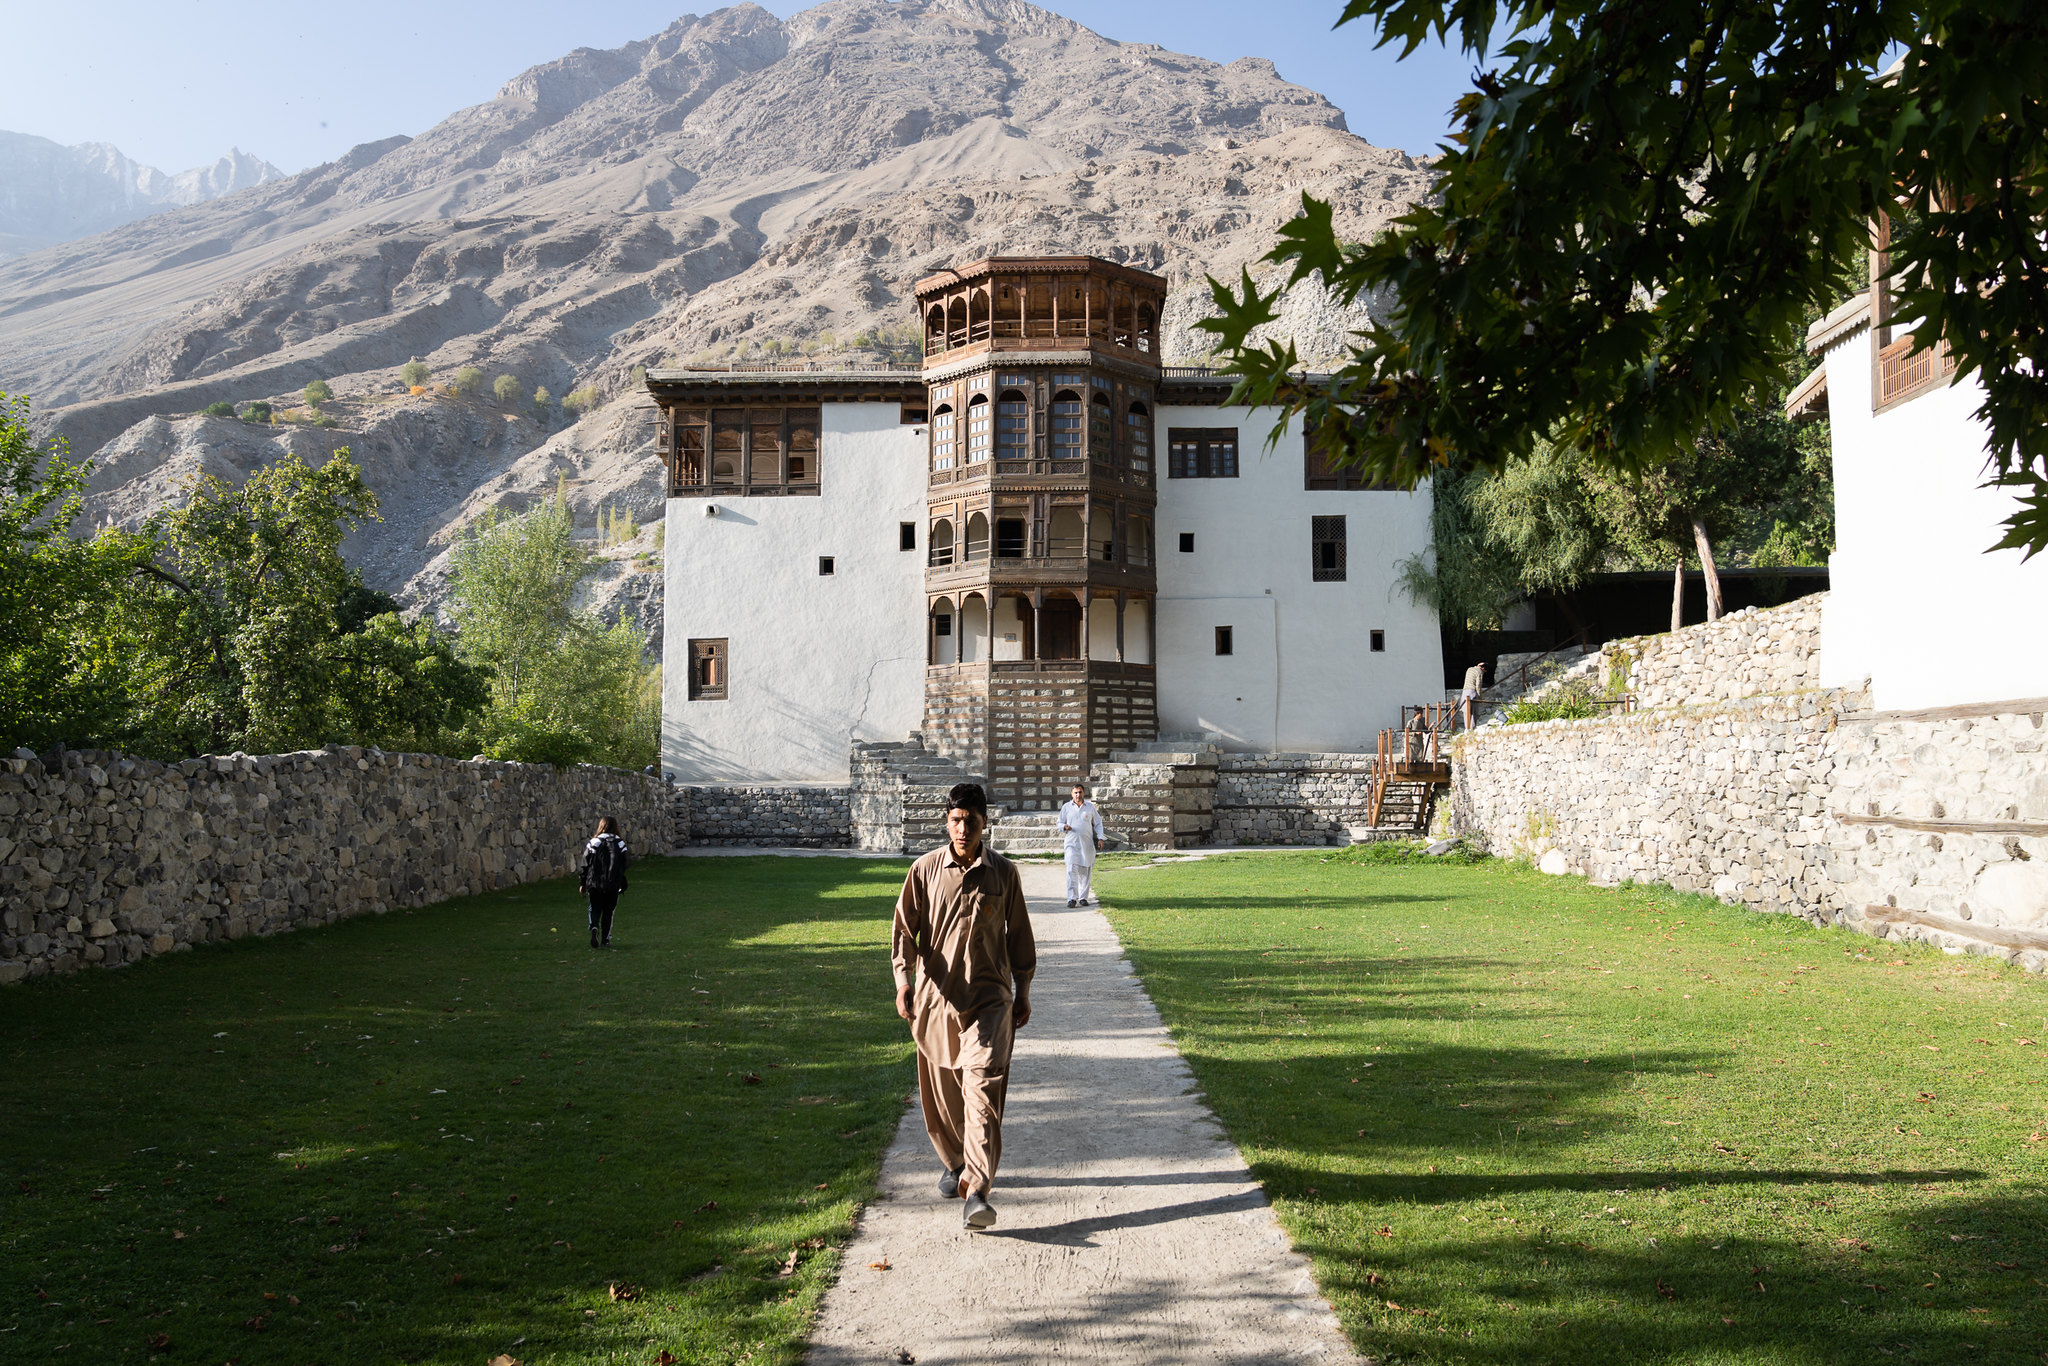 Khaplu Palace, Baltistan in Northern Pakistan